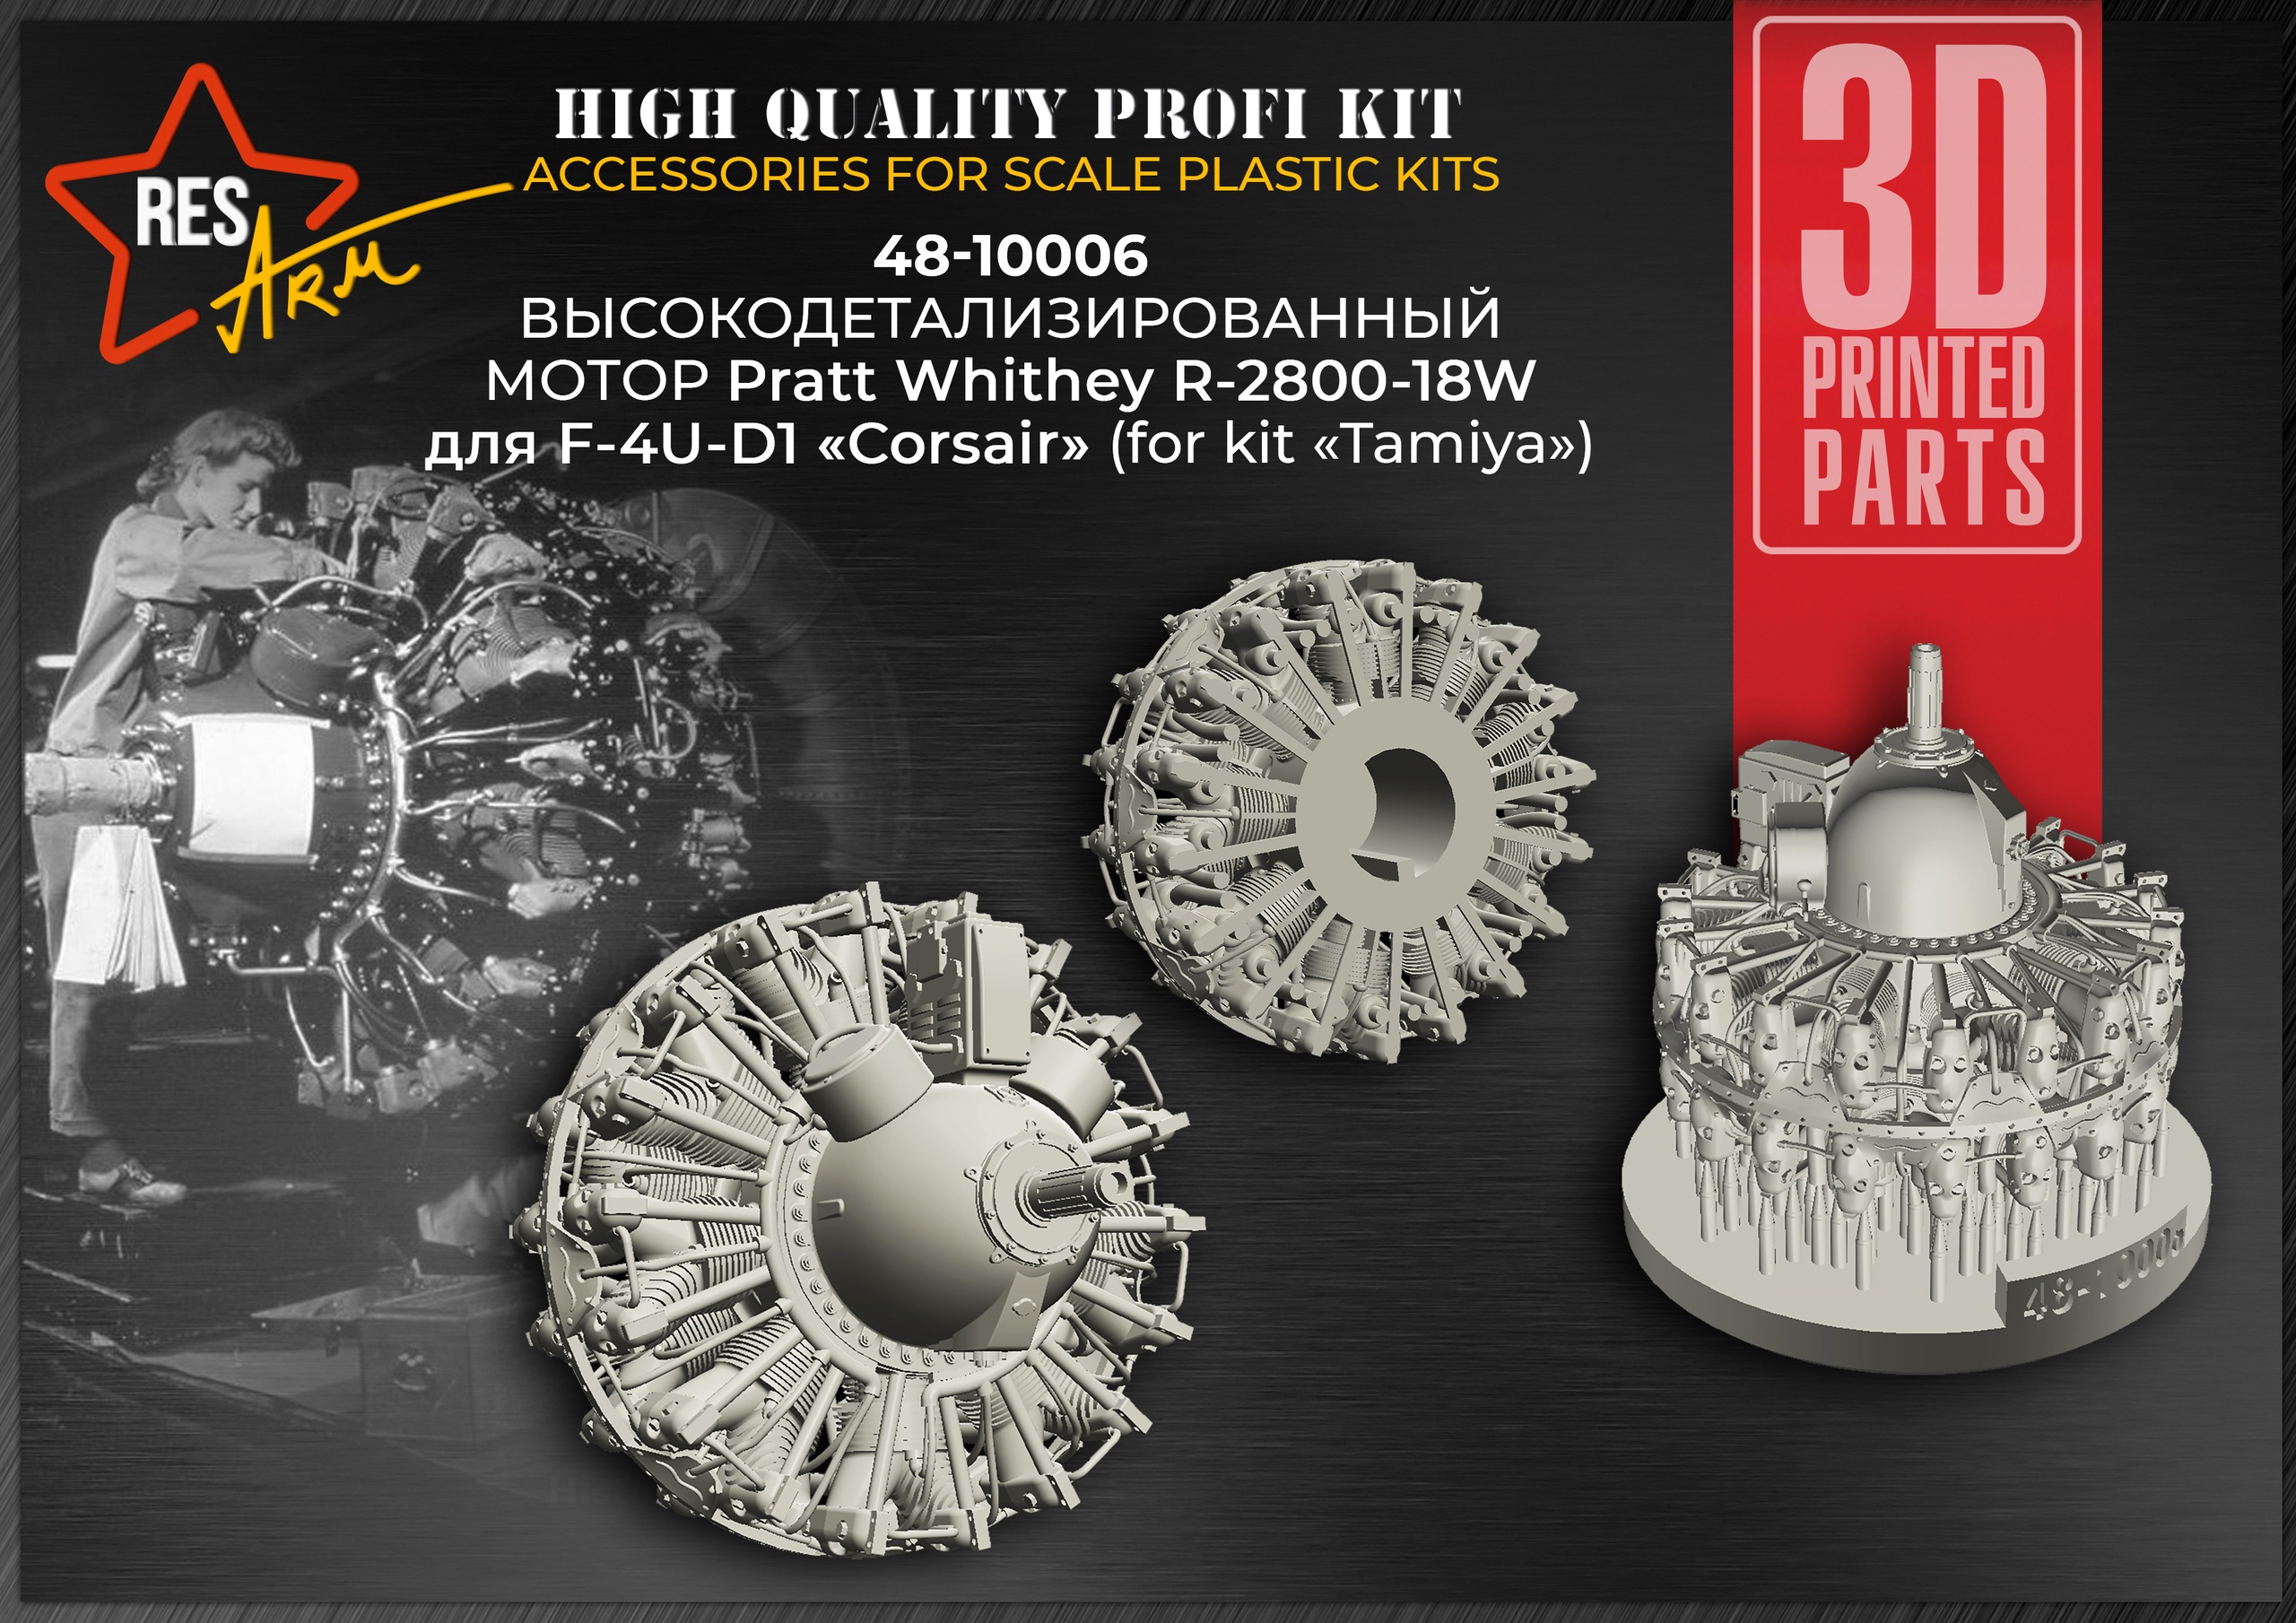 Additions (3D resin printing) 1/48 Pratt Whithey R-2800-18W motor for F-4U-D1 "Corsair" (Tamiya) (RESArm)